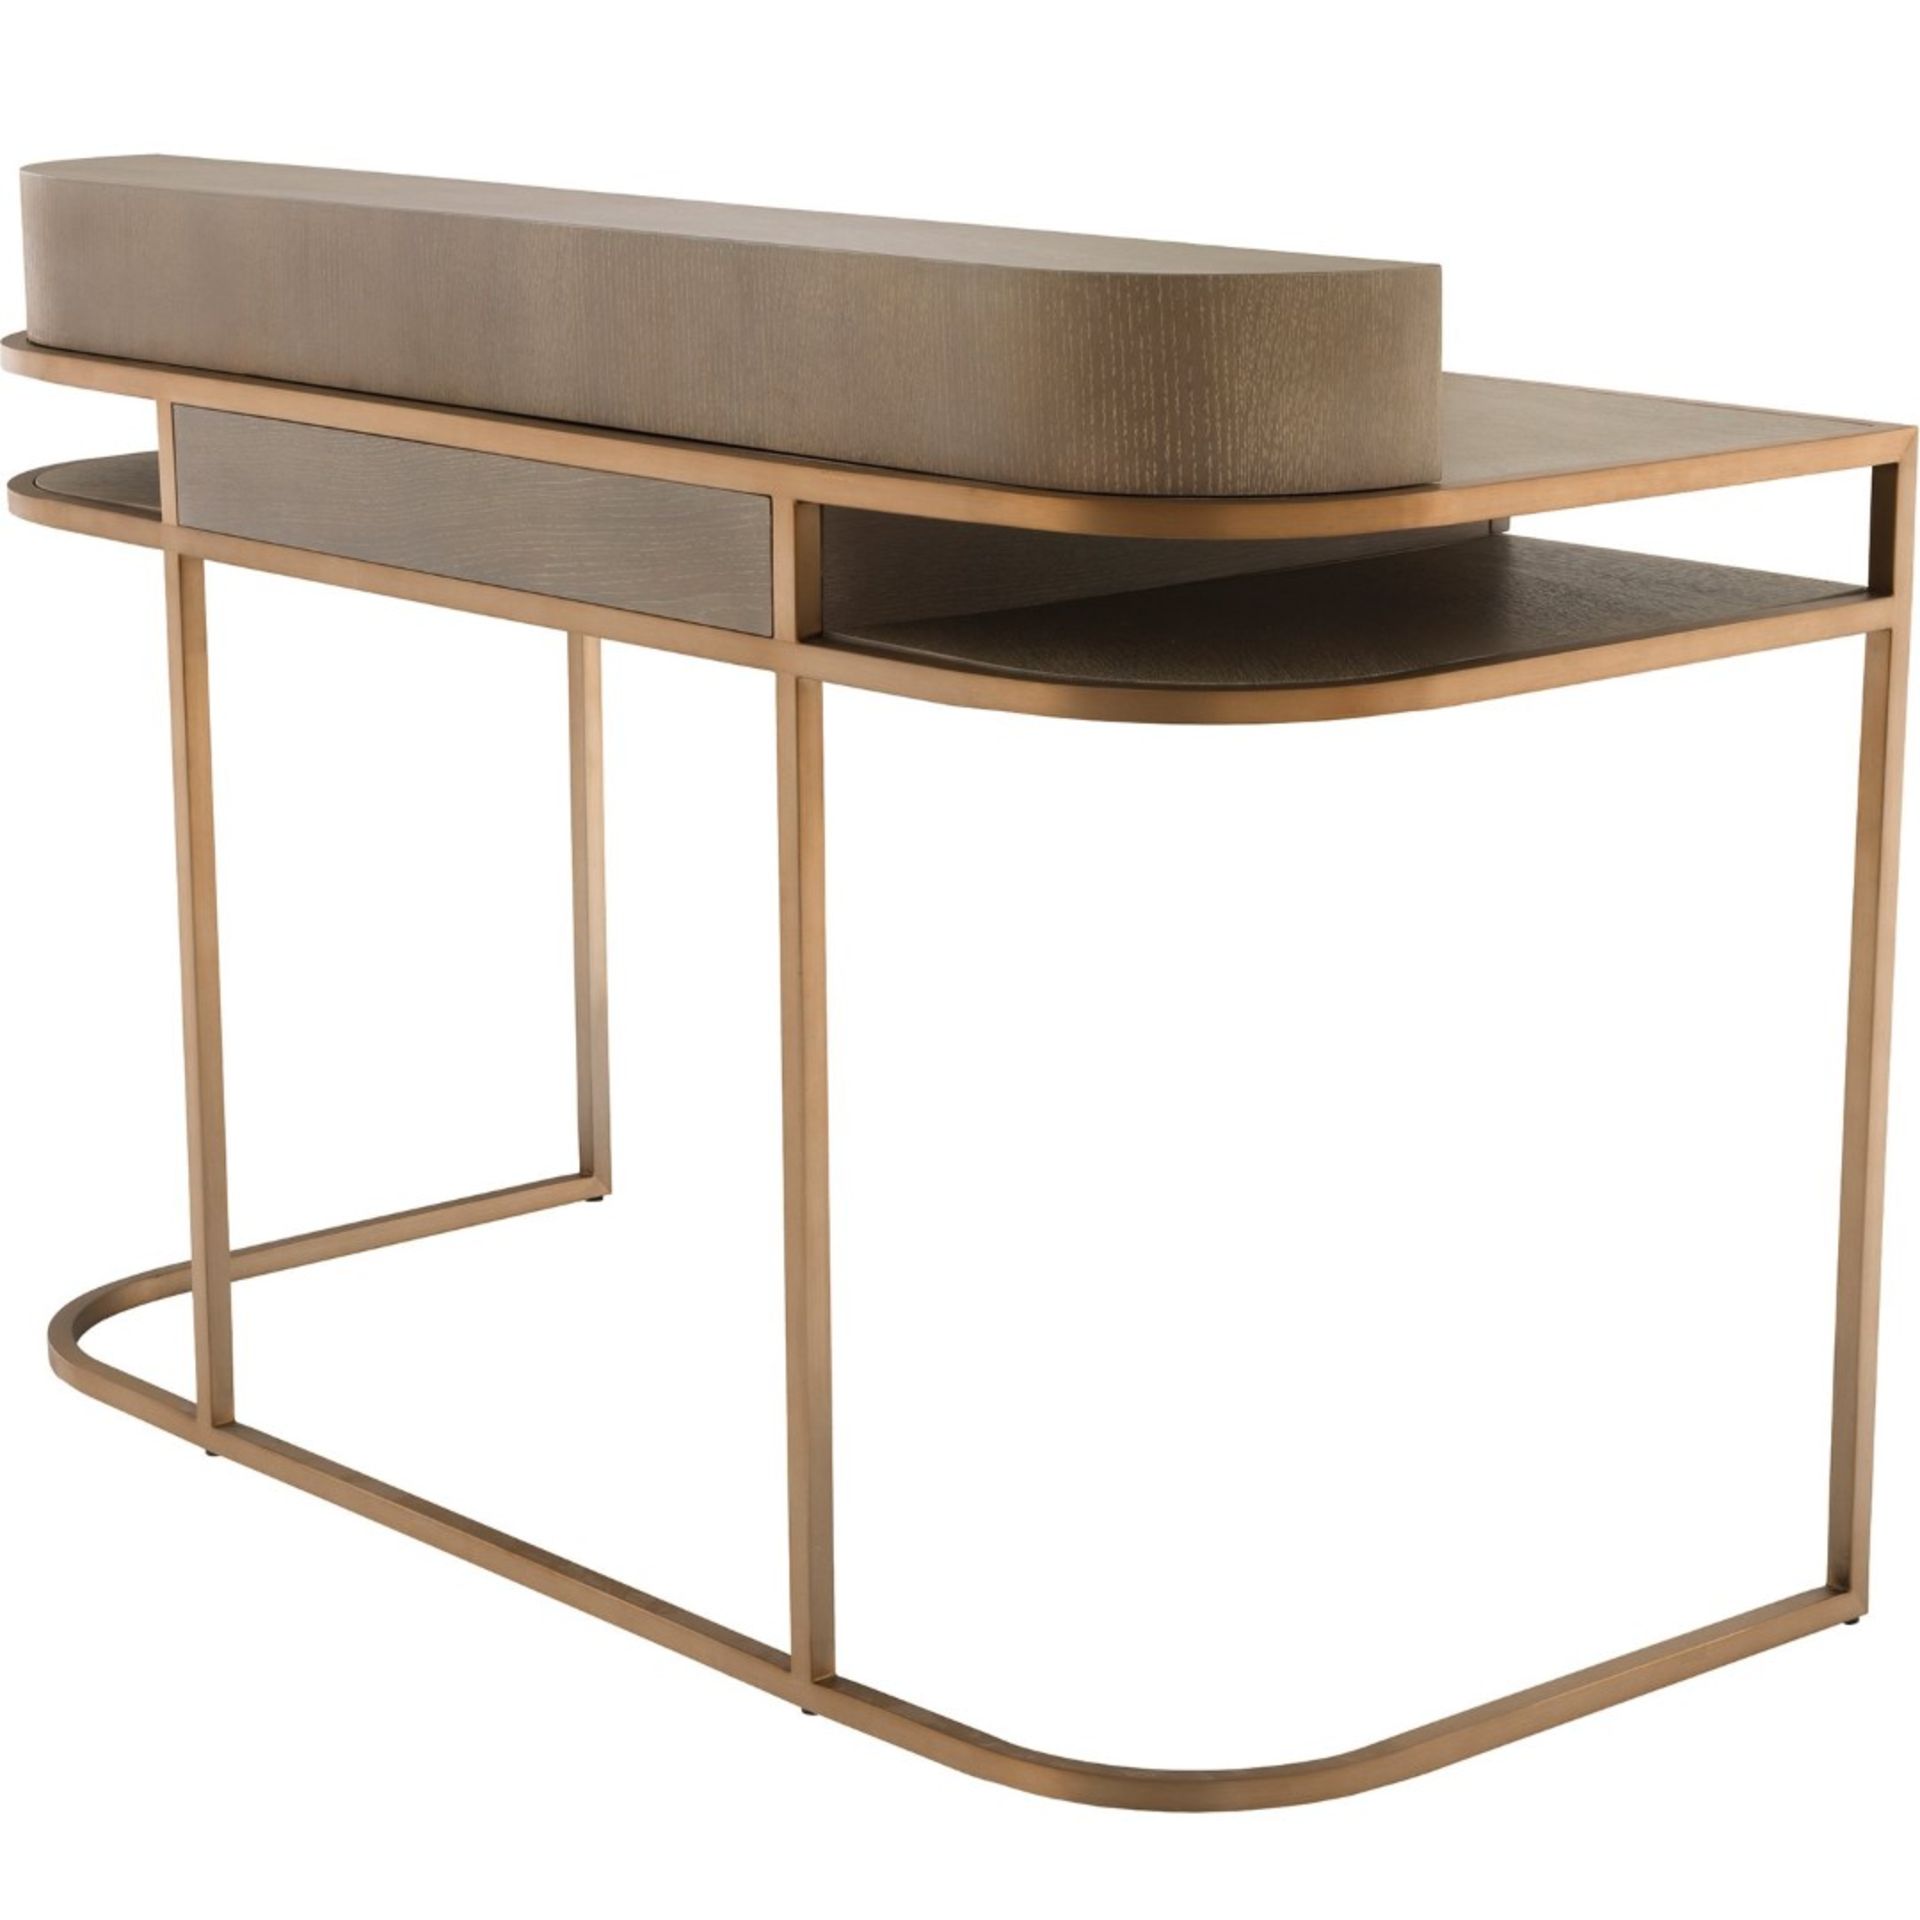 1 x EICHHOLTZ 'Highland' Designer Desk With Washed Oak And Brushed Brass Finishes - Ex-Display - - Image 4 of 12